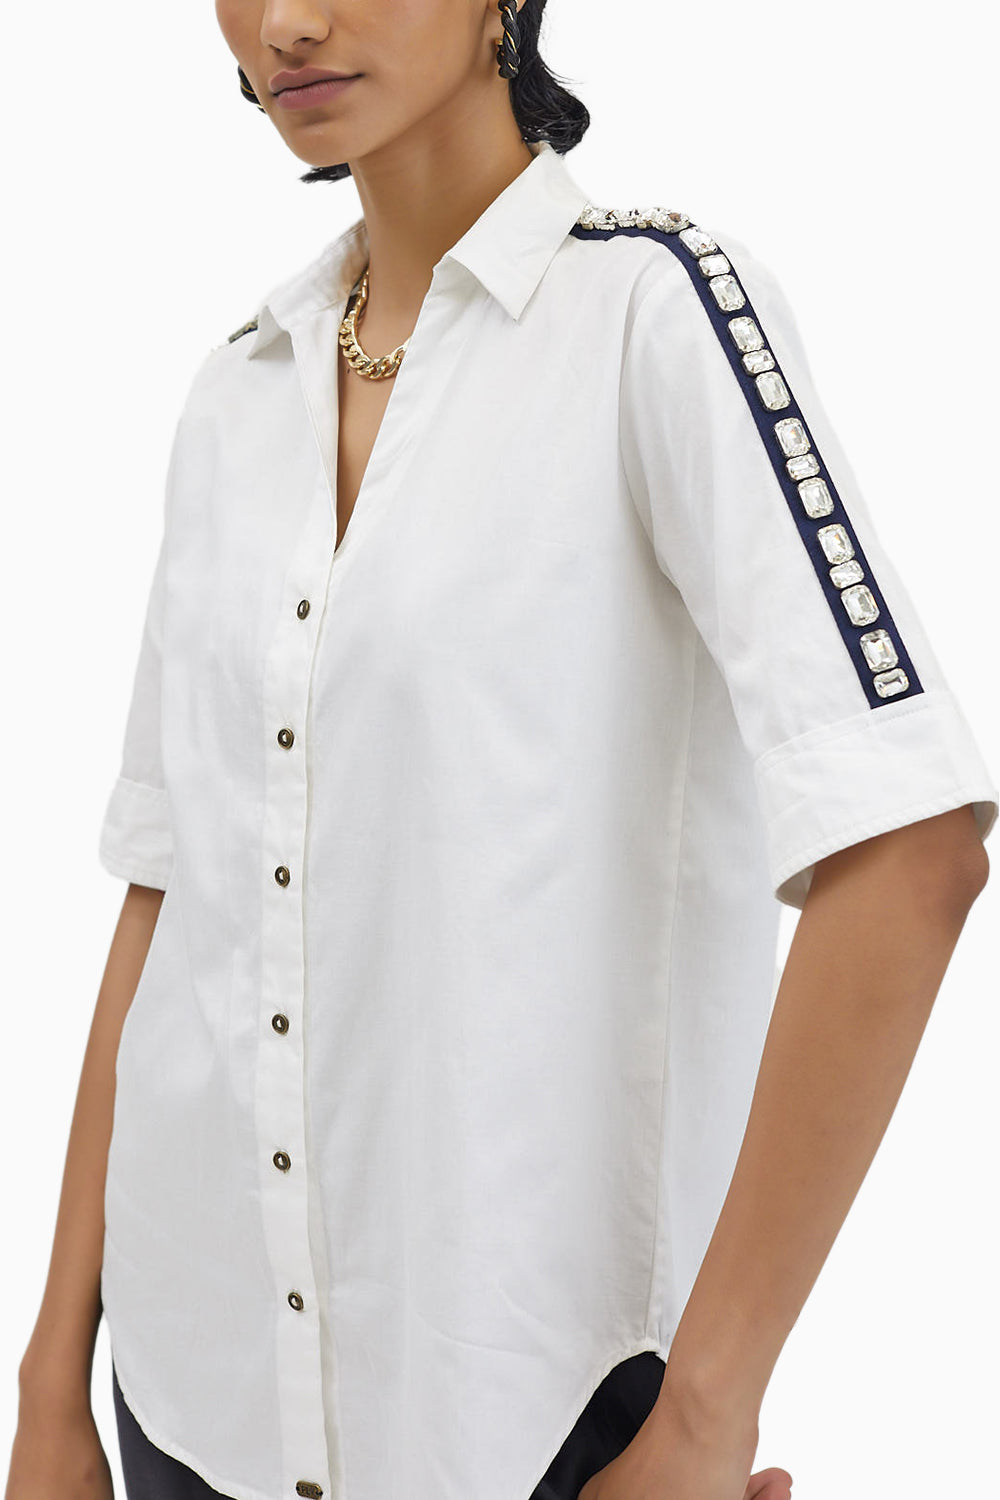 White Rectangle Swarovski Ribbon Shirt